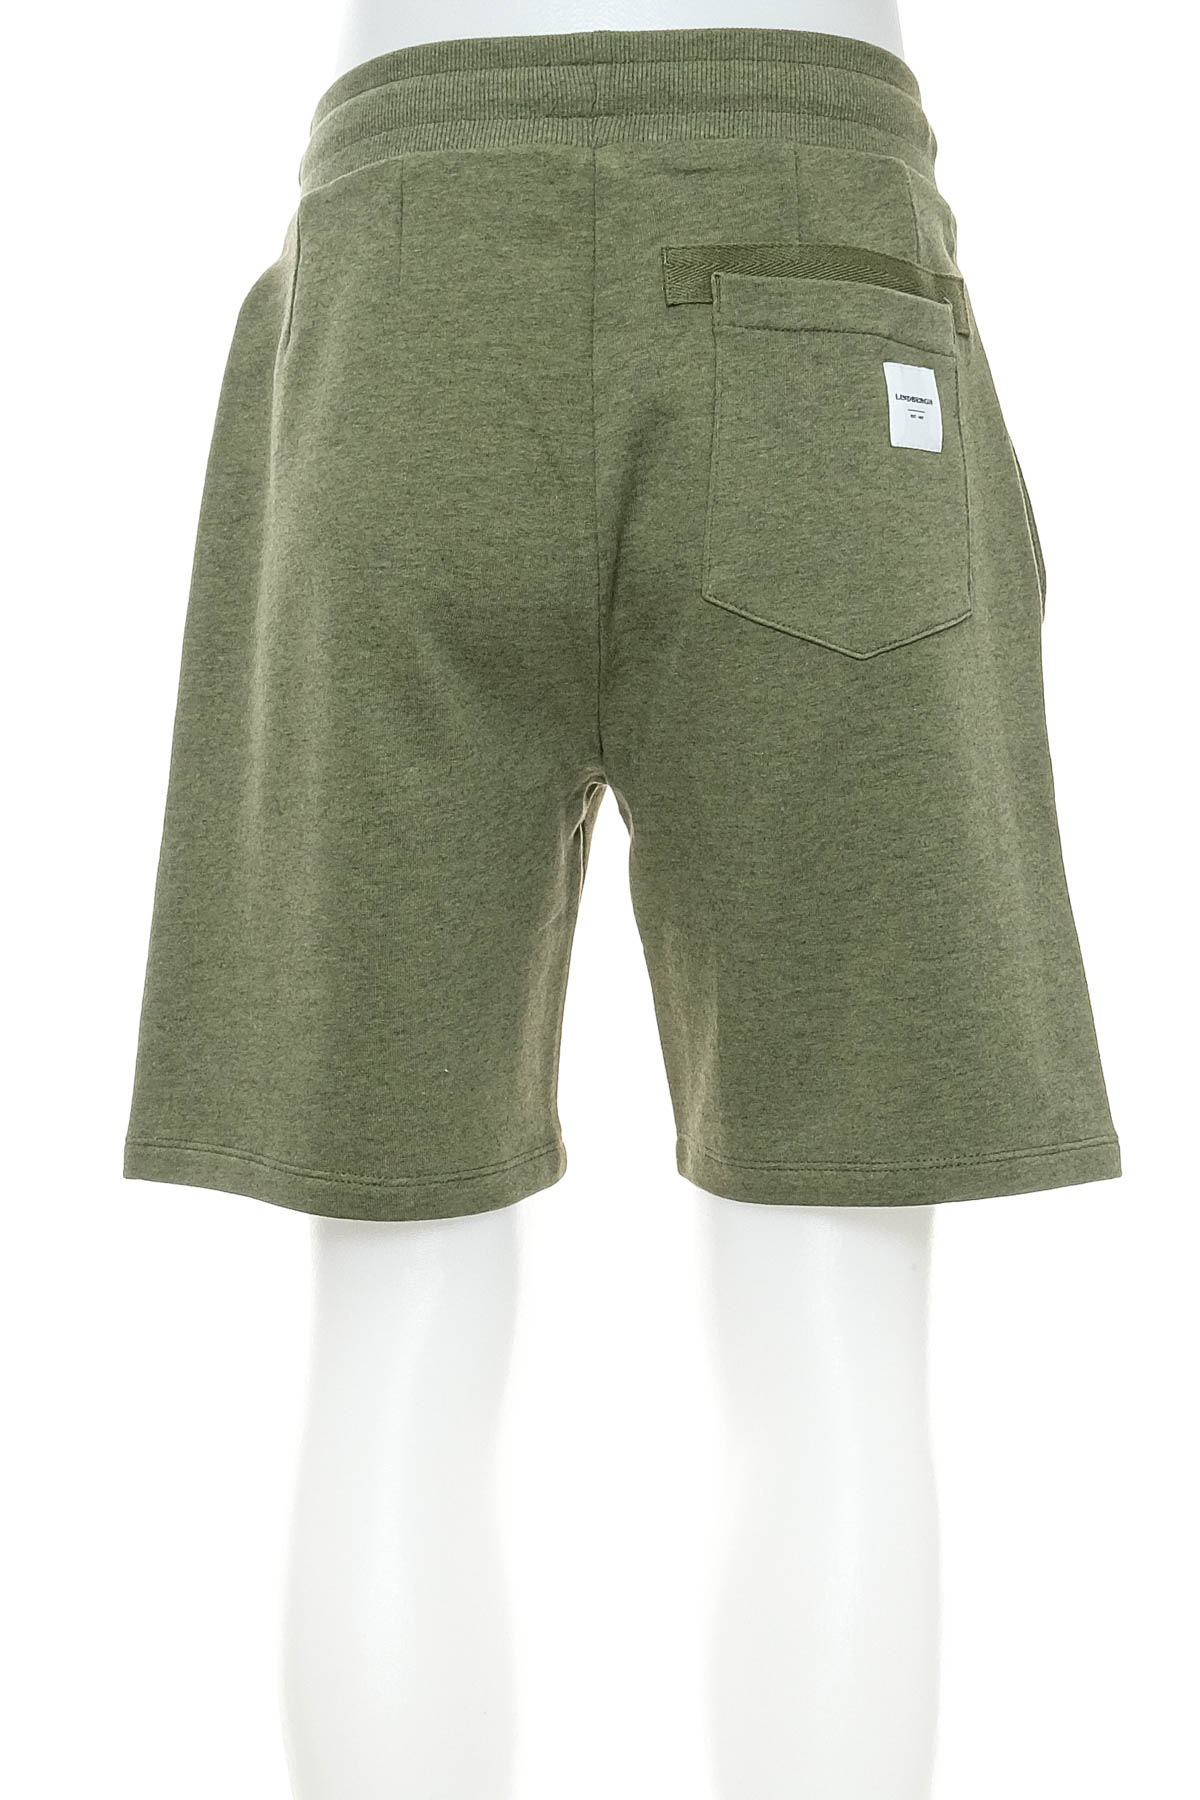 Men's shorts - LINDBERGH - 1